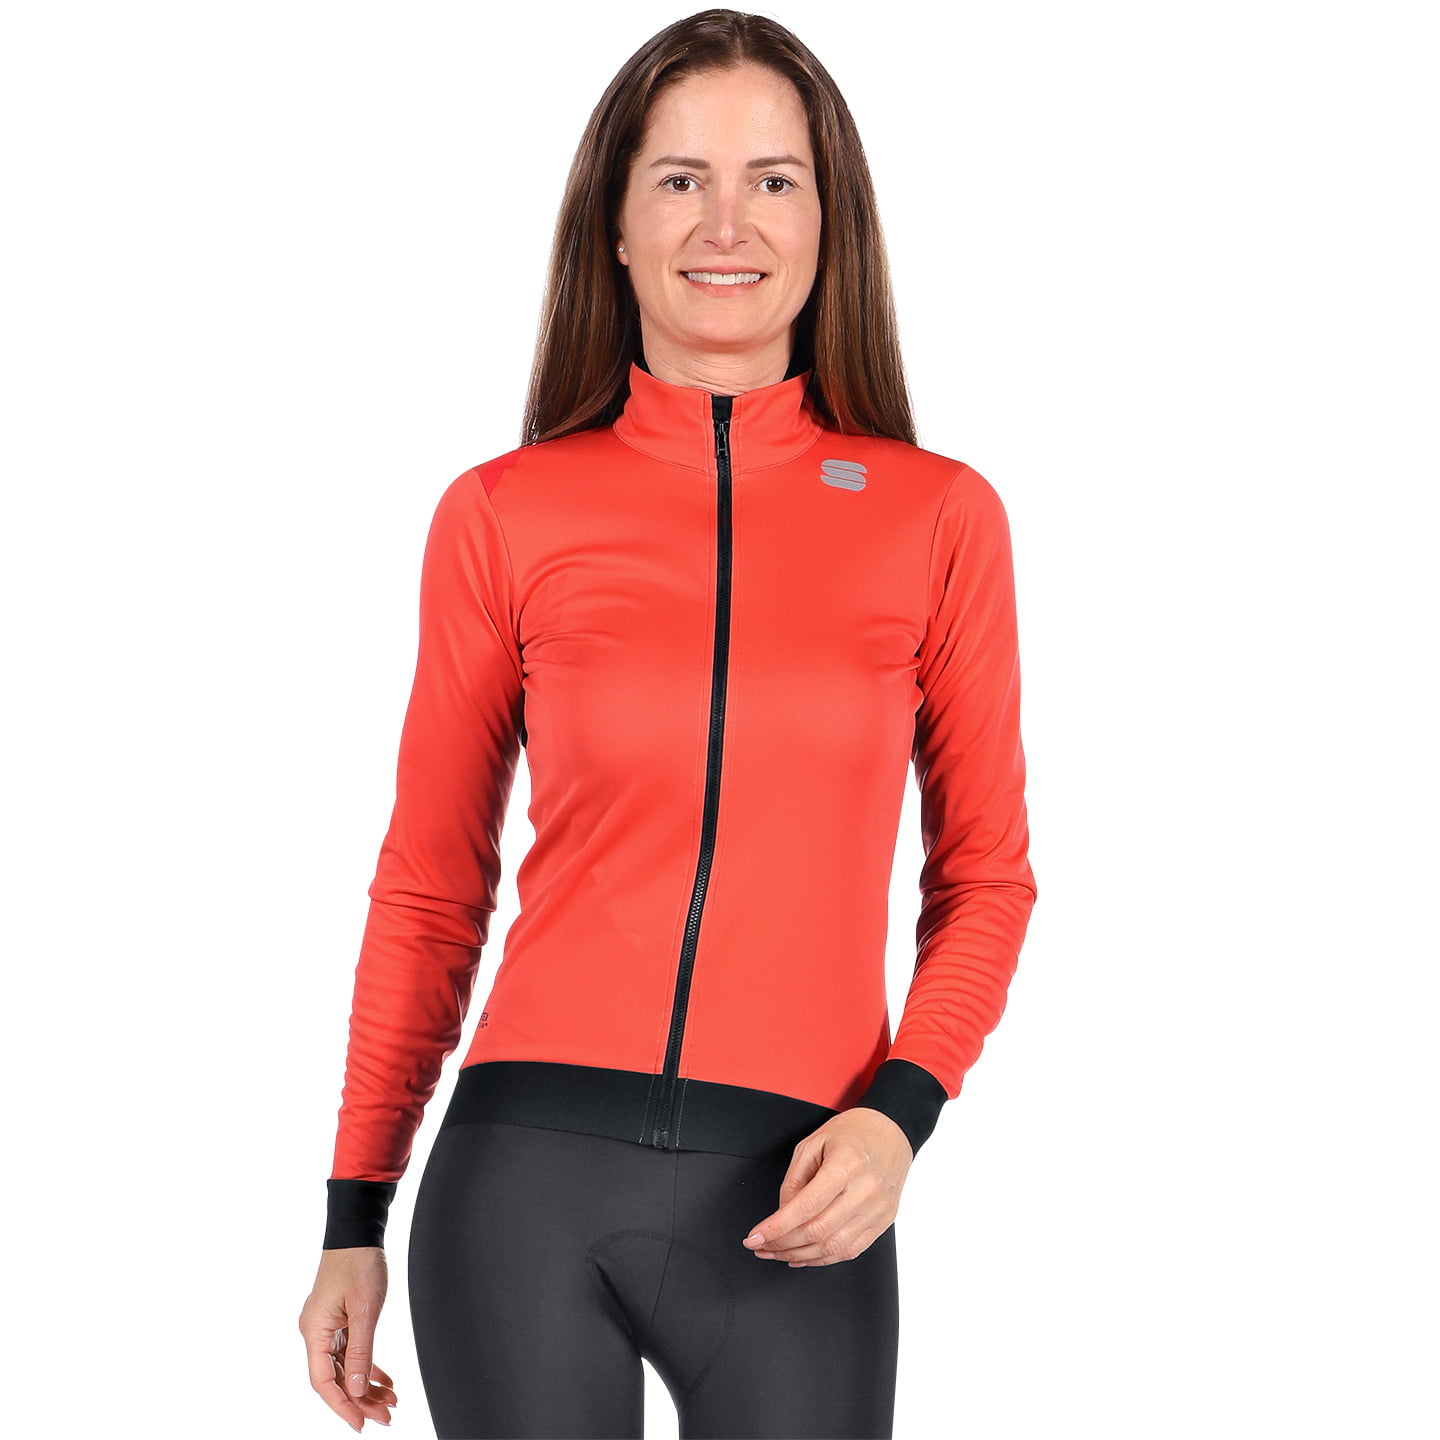 SPORTFUL Fiandre medium Winter Jacket Women’s Cycling Jacket, size L, Cycle jacket, Cycling clothing